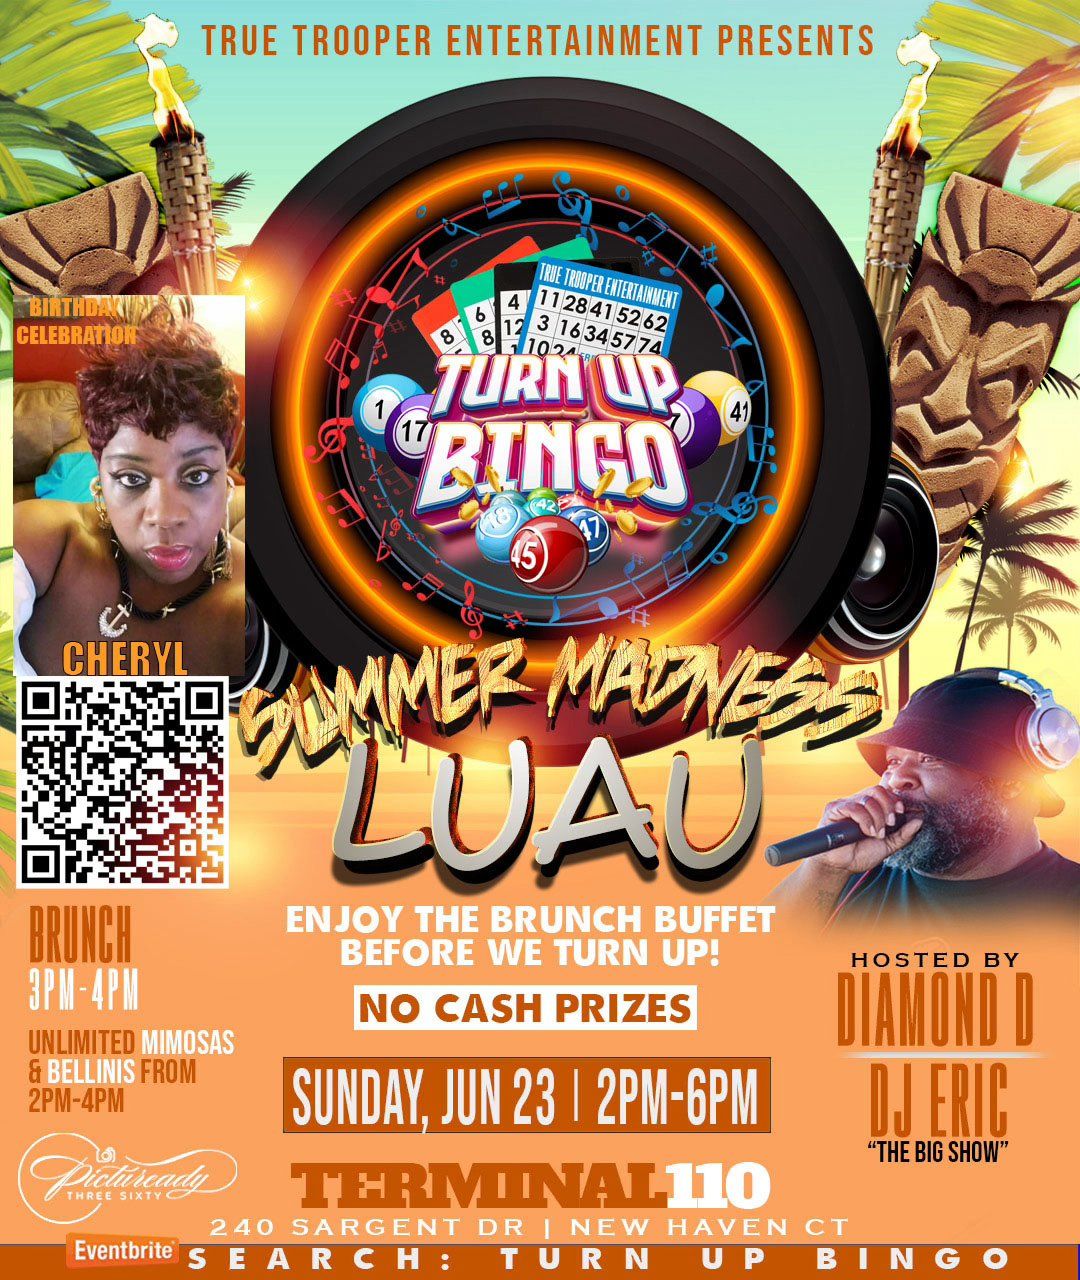 Turn Up Bingo Presents "Summer Madness Luau"